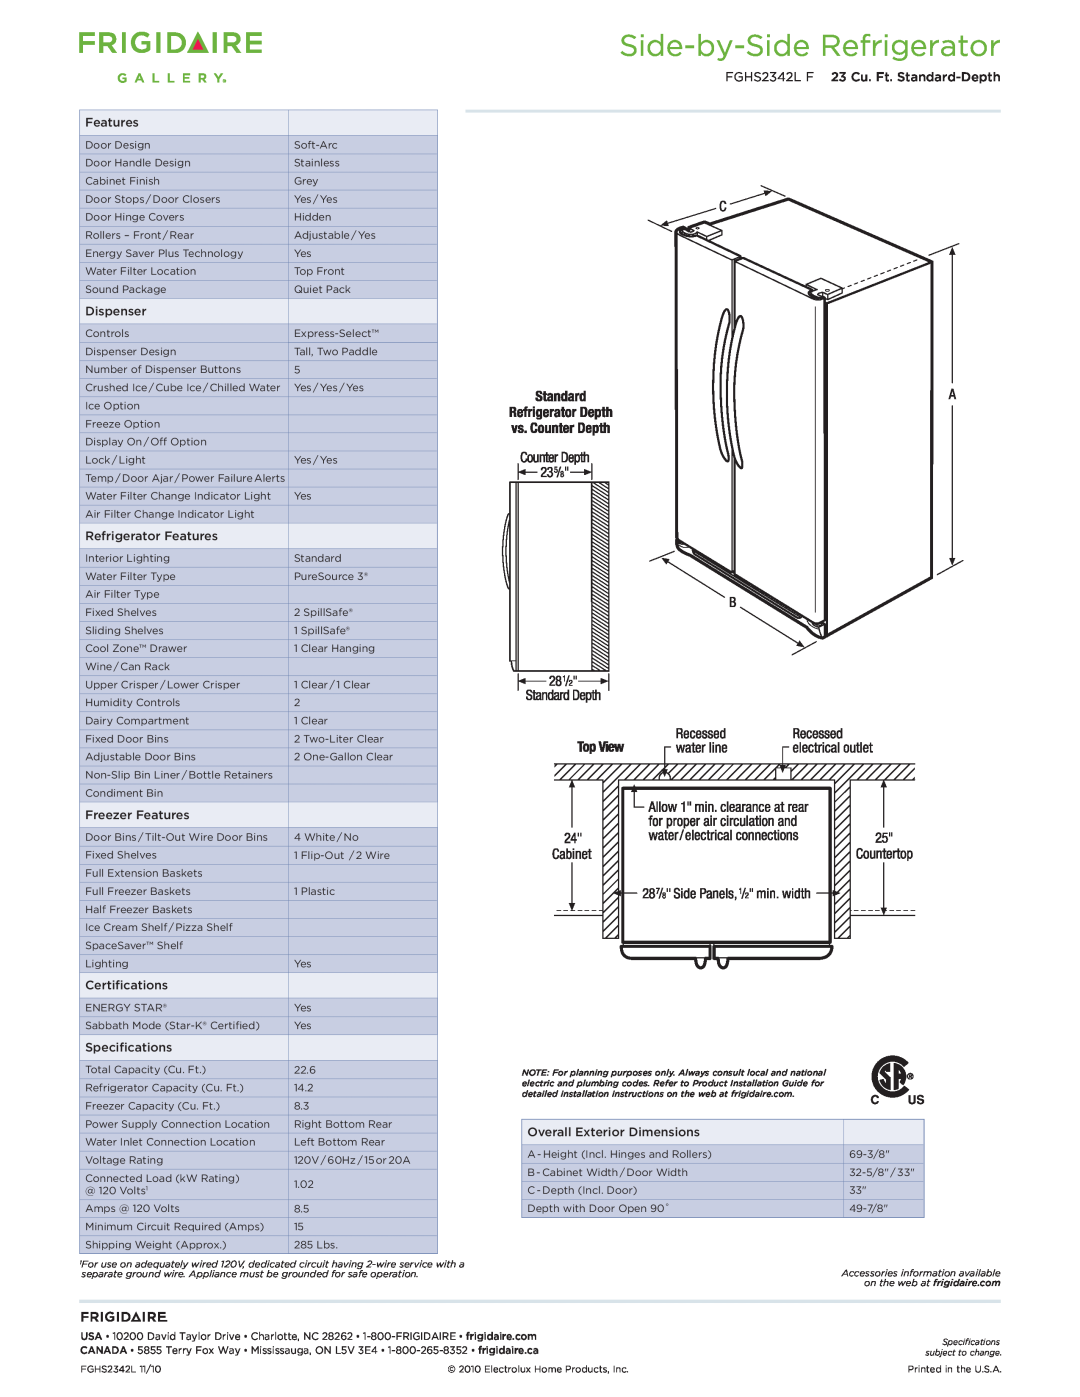 Frigidaire dimensions Side-by-SideRefrigerator, FGHS2342L F 23 Cu. Ft. Standard-Depth 